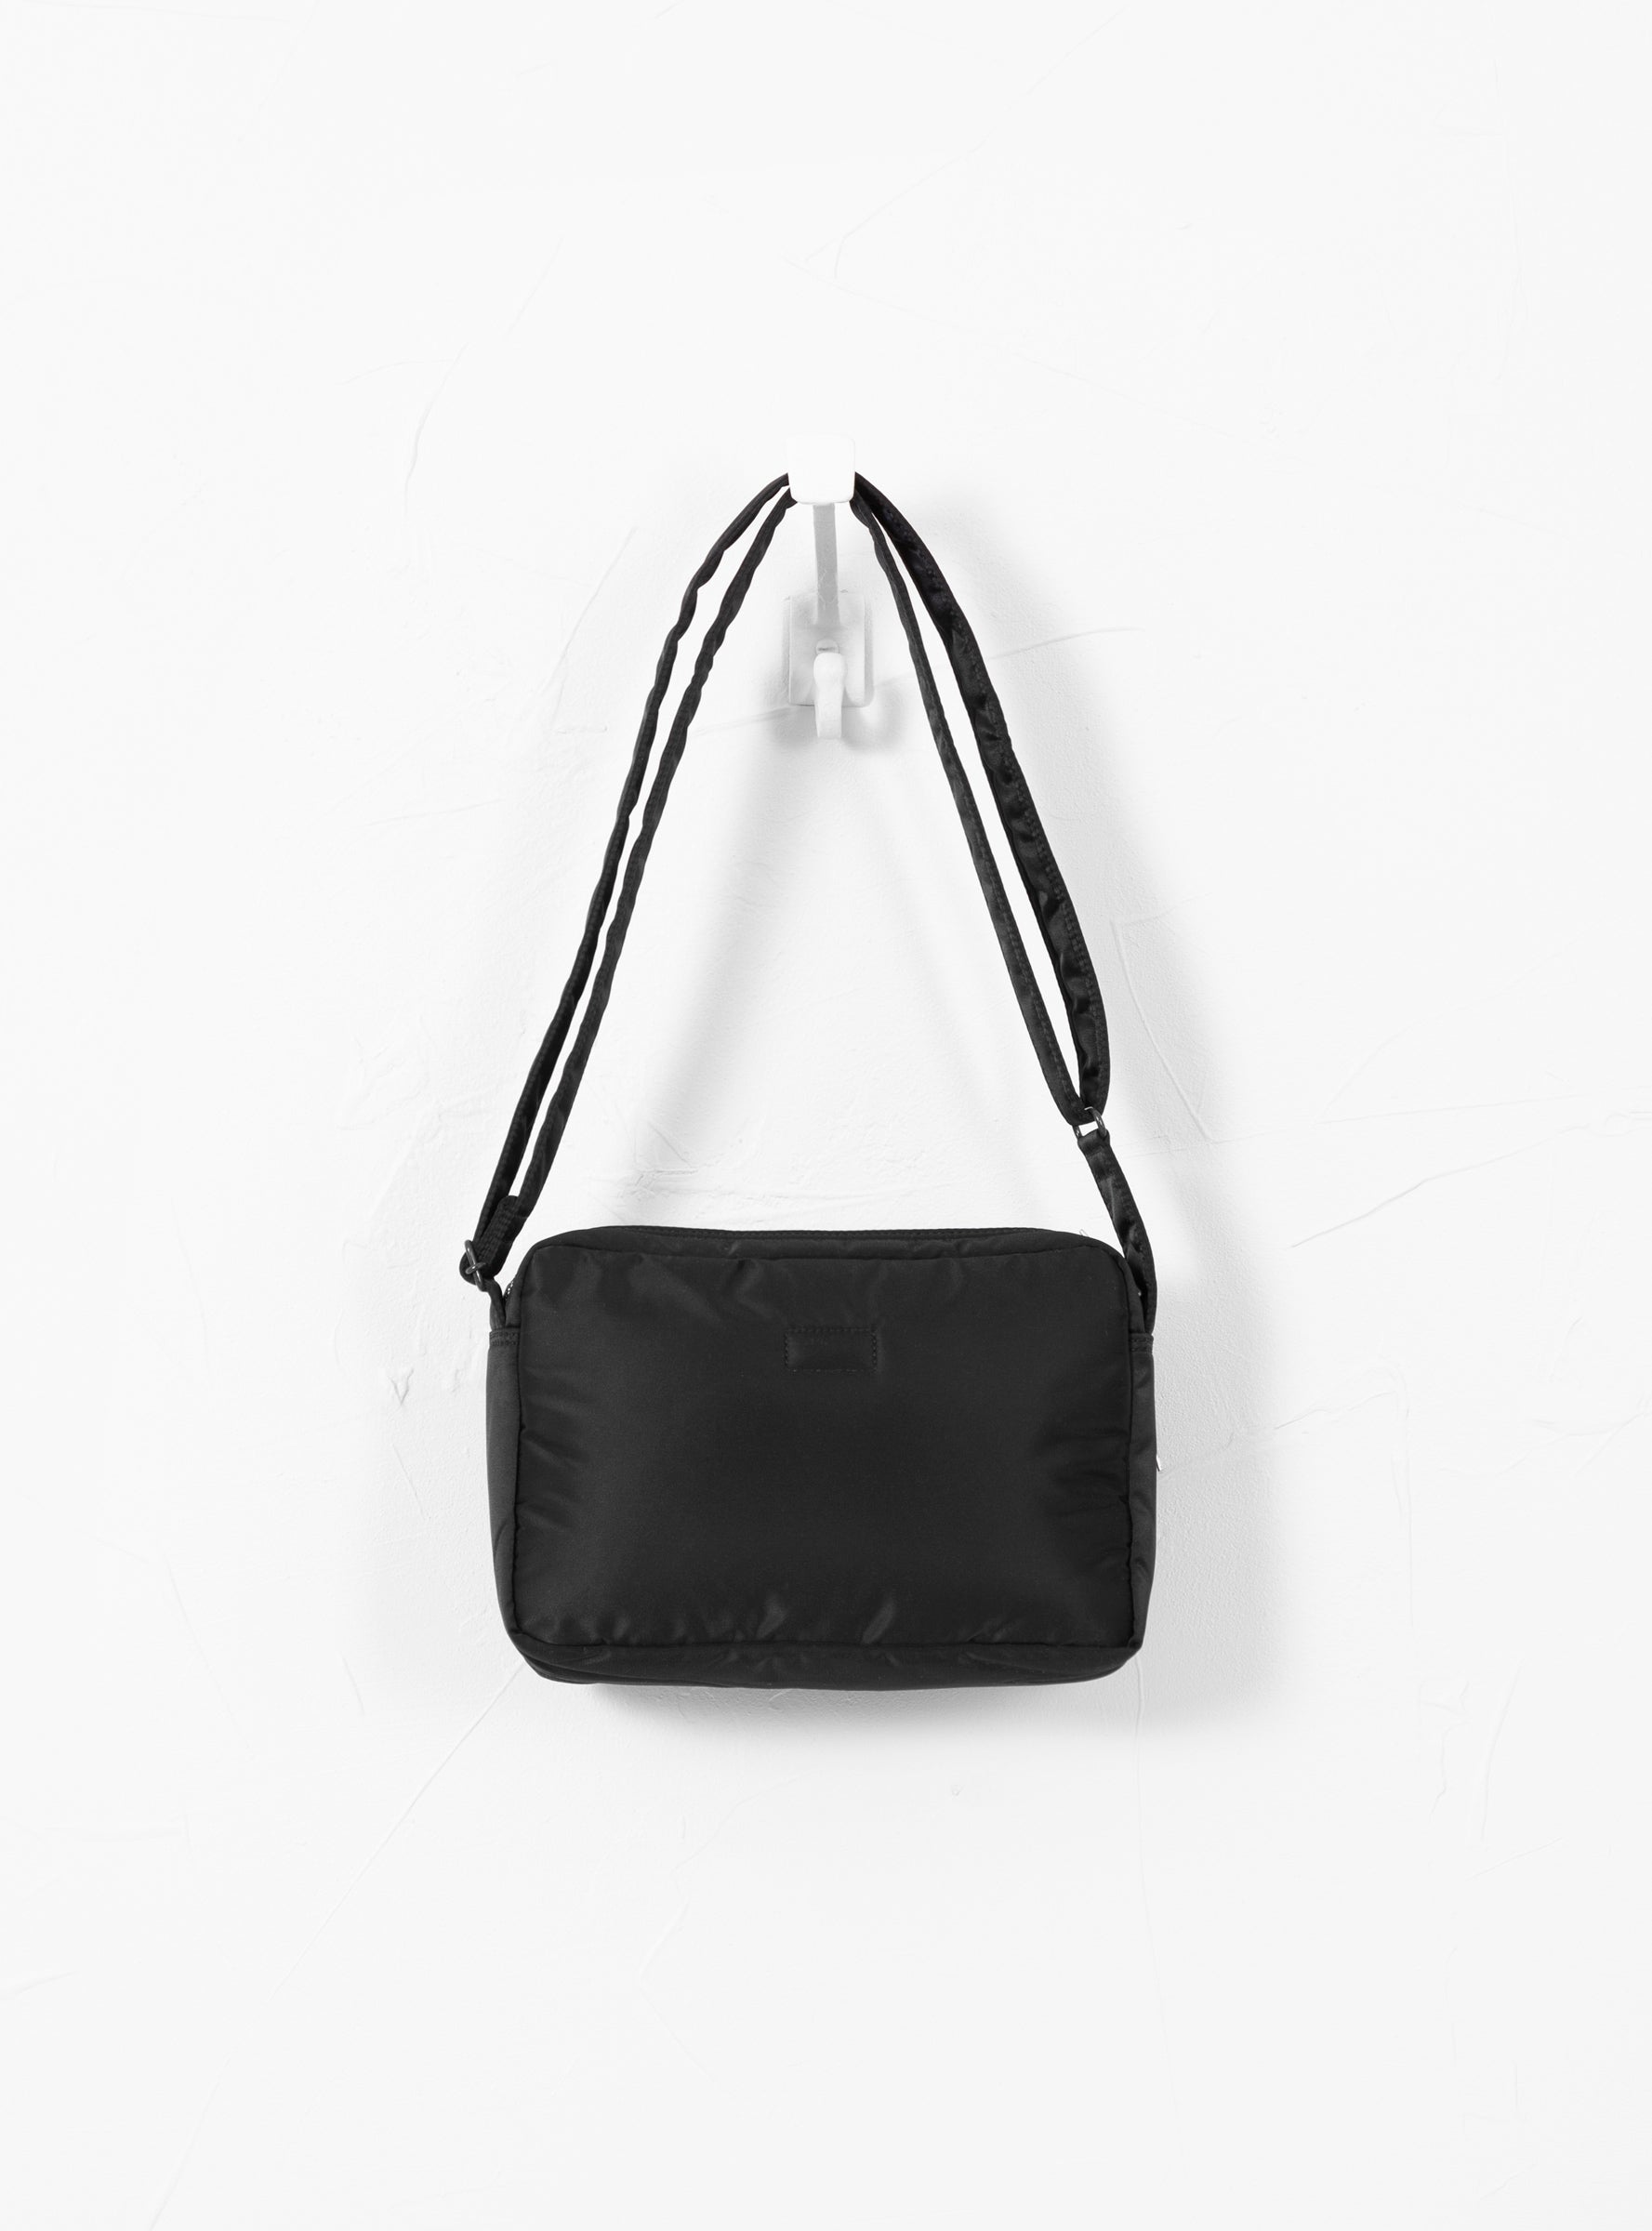 TANKER Shoulder Bag Small Black by Porter Yoshida & Co 